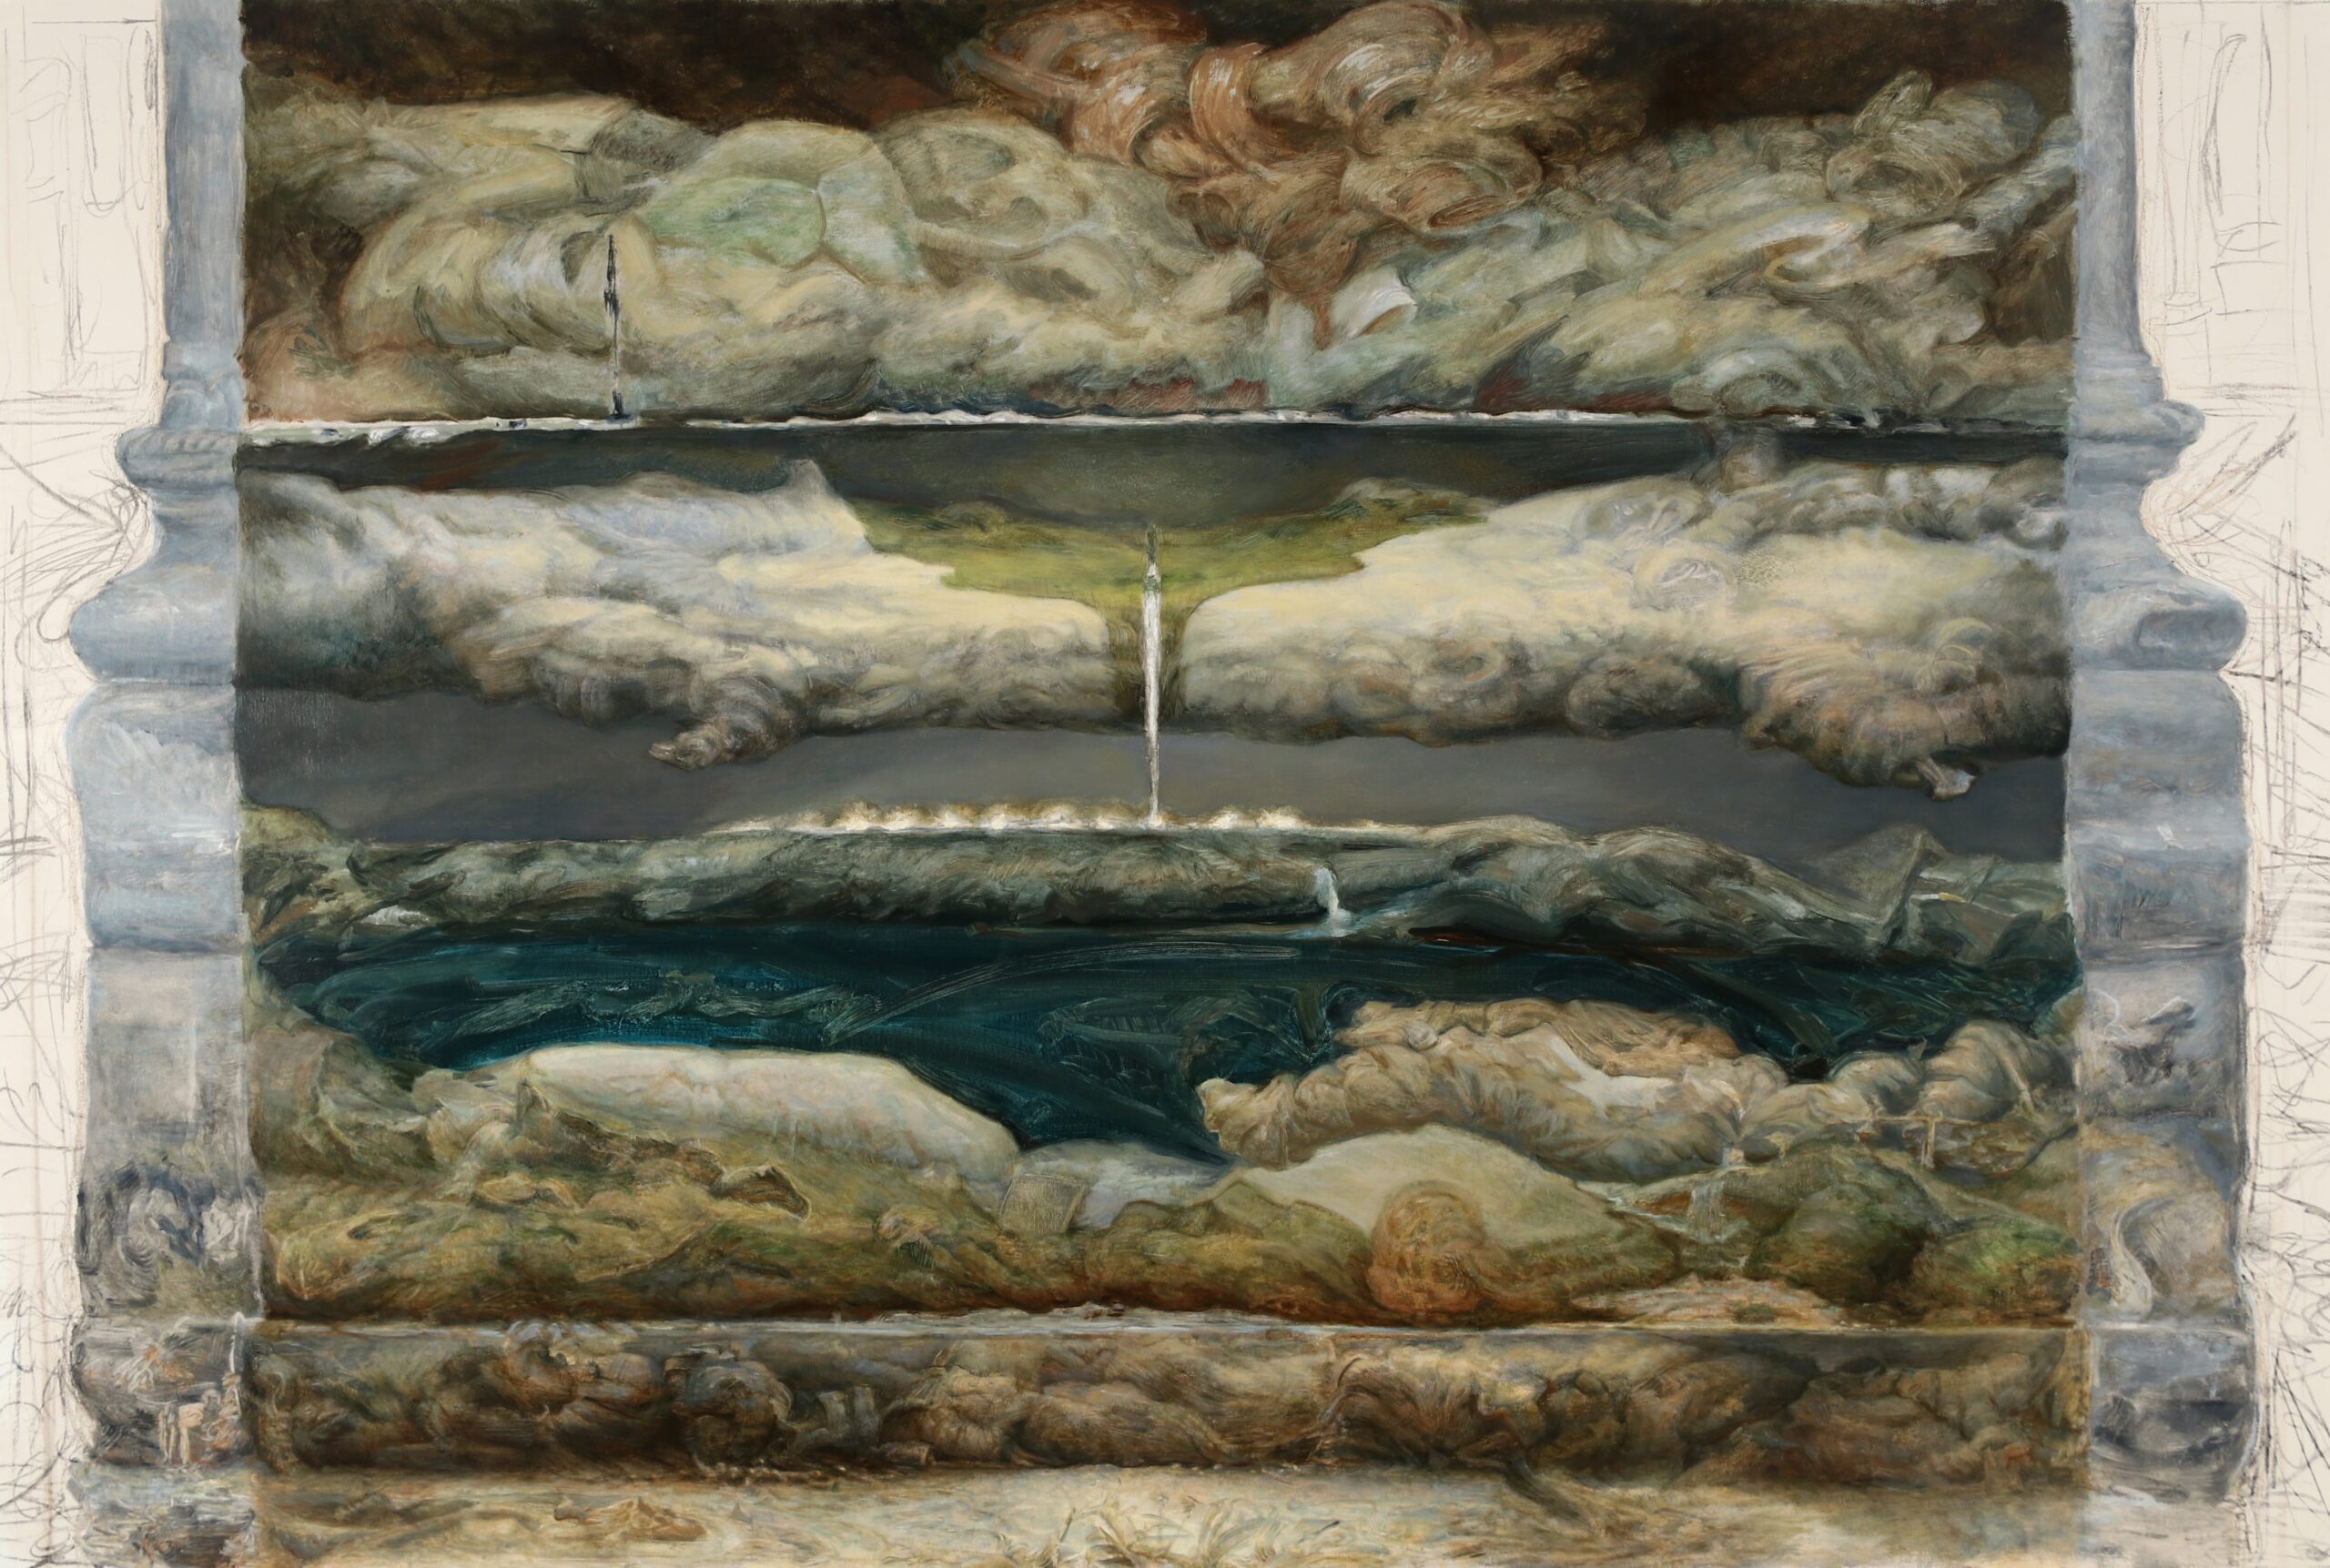 Cesar Santos, "Corridor," 2022, oil on linen, 96 x 140 cm